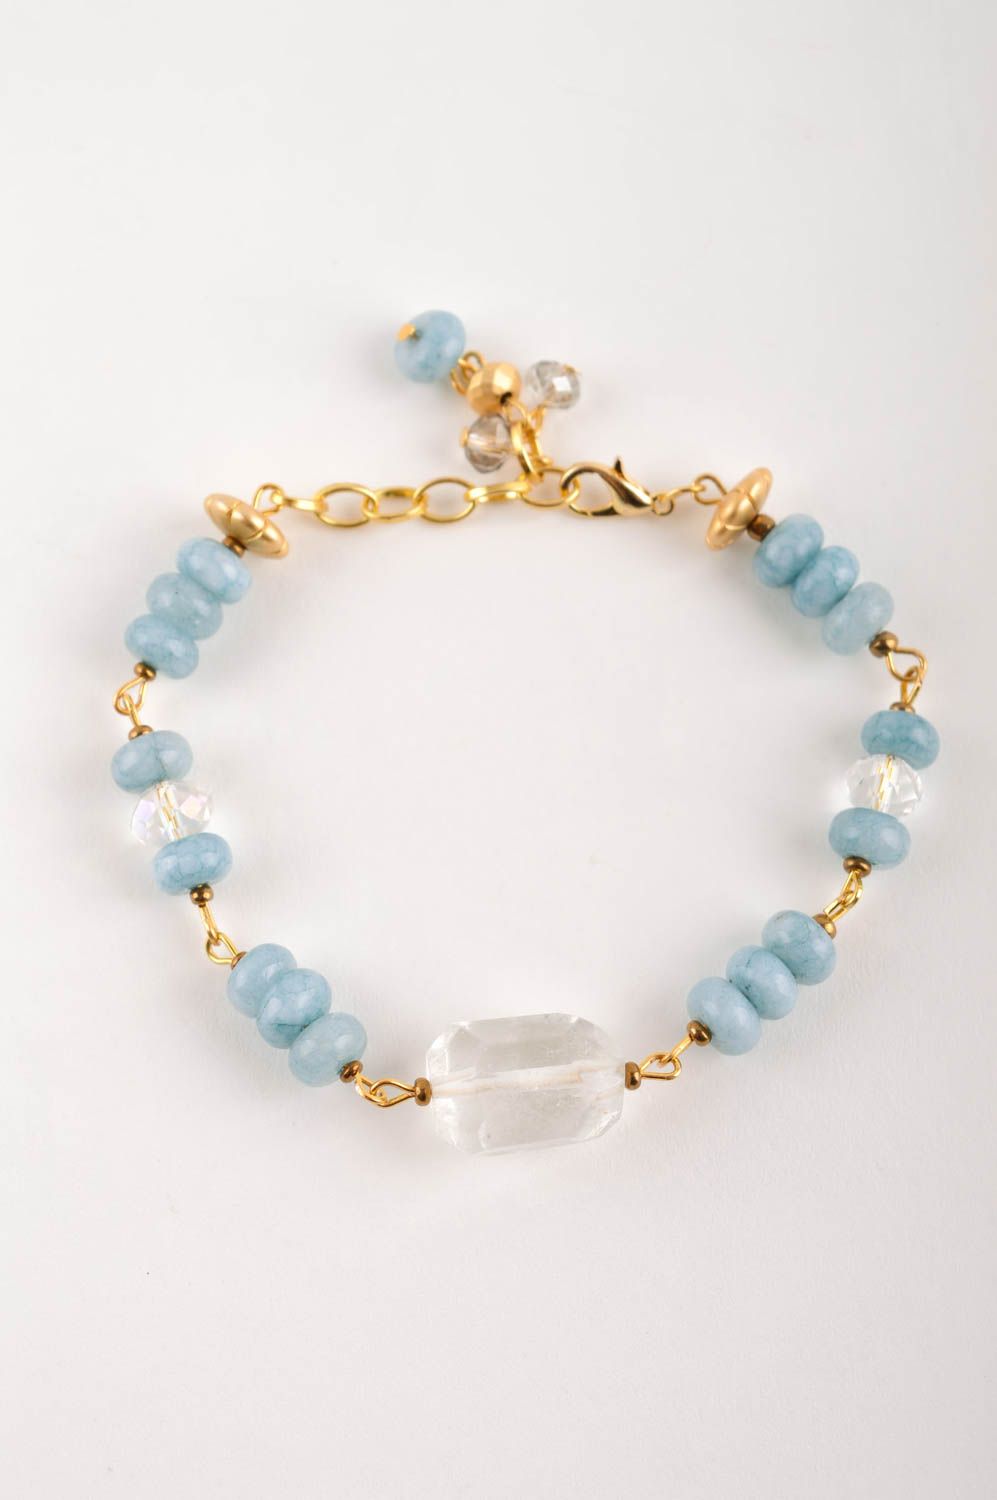 Handmade designer bracelet wrist bracelet fashion jewelry with natural stones photo 2